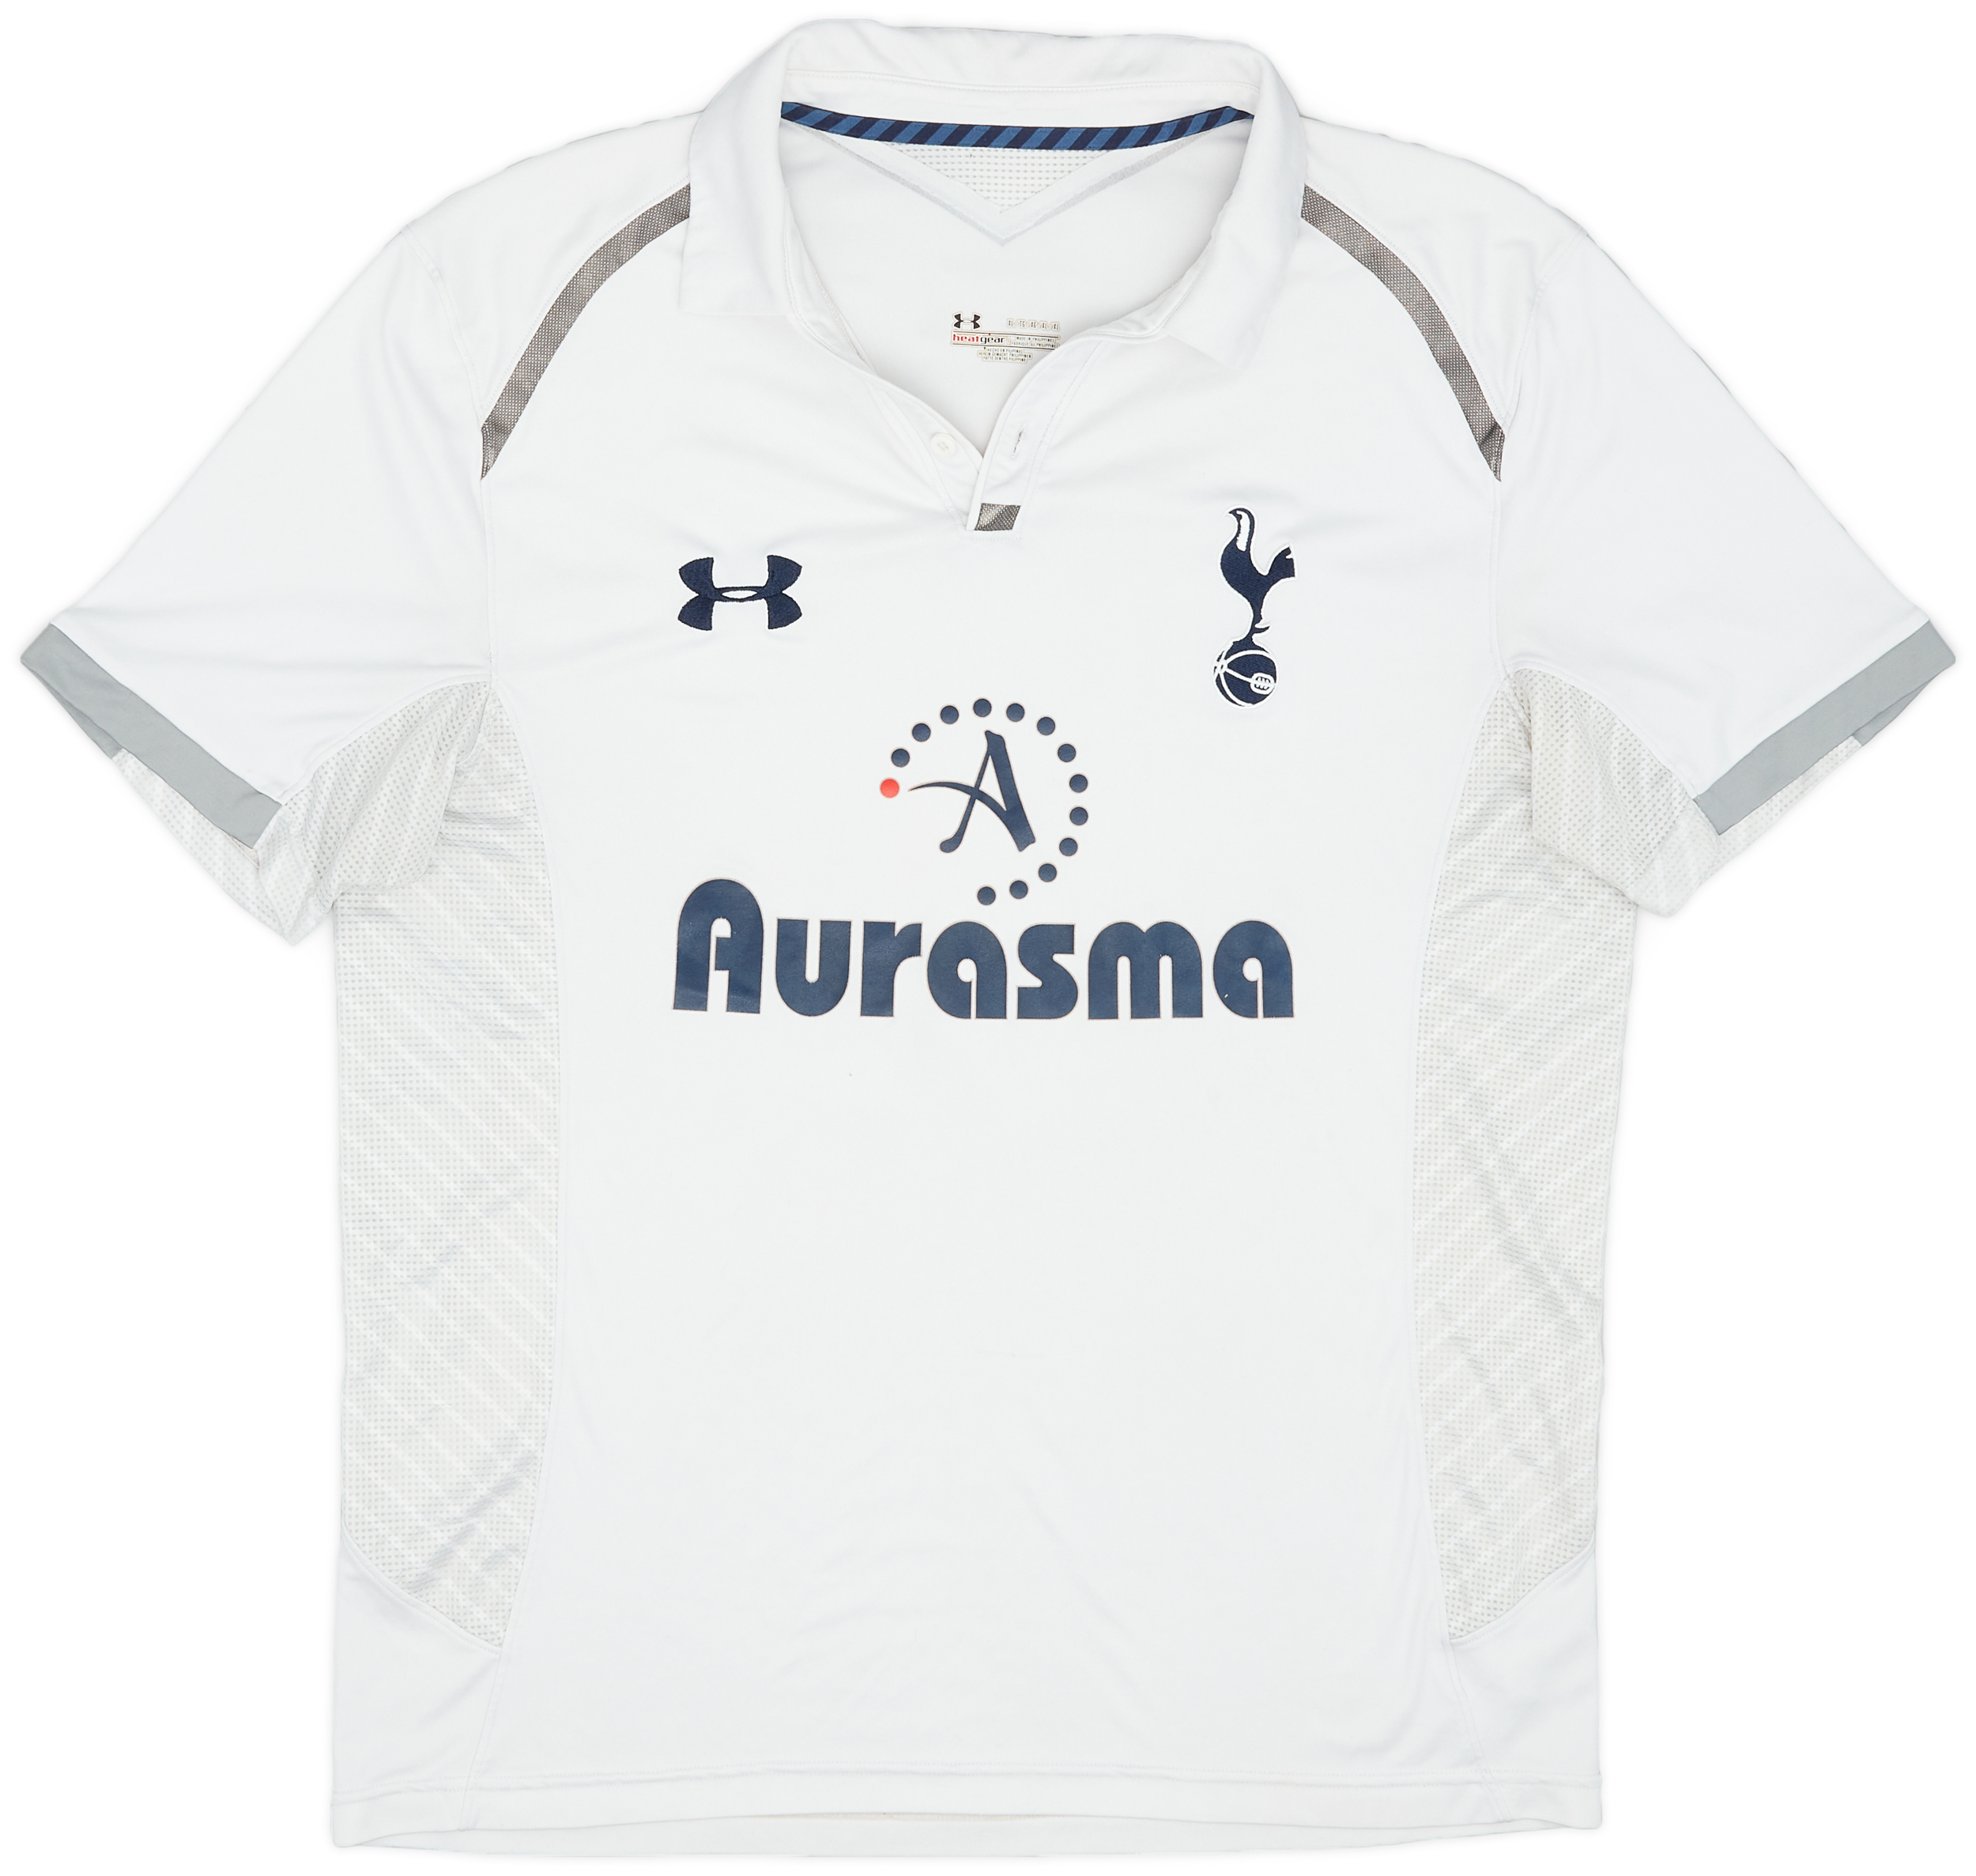 2012-13 Tottenham Third L/S Shirt Bale #11 - 8/10 - (XL)